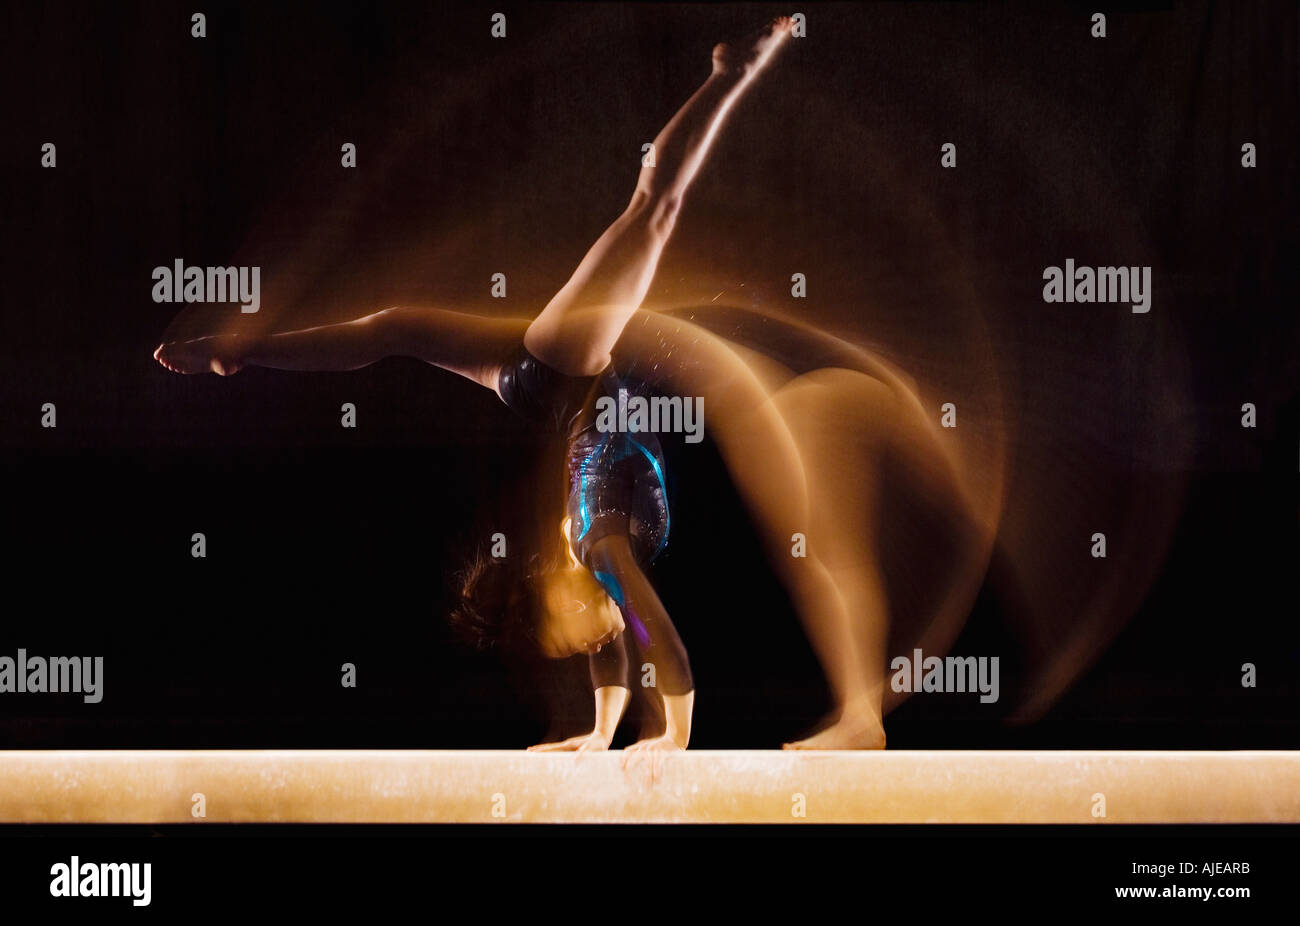 Multiple exposure image of female gymnast in motion on balance beam Stock Photo